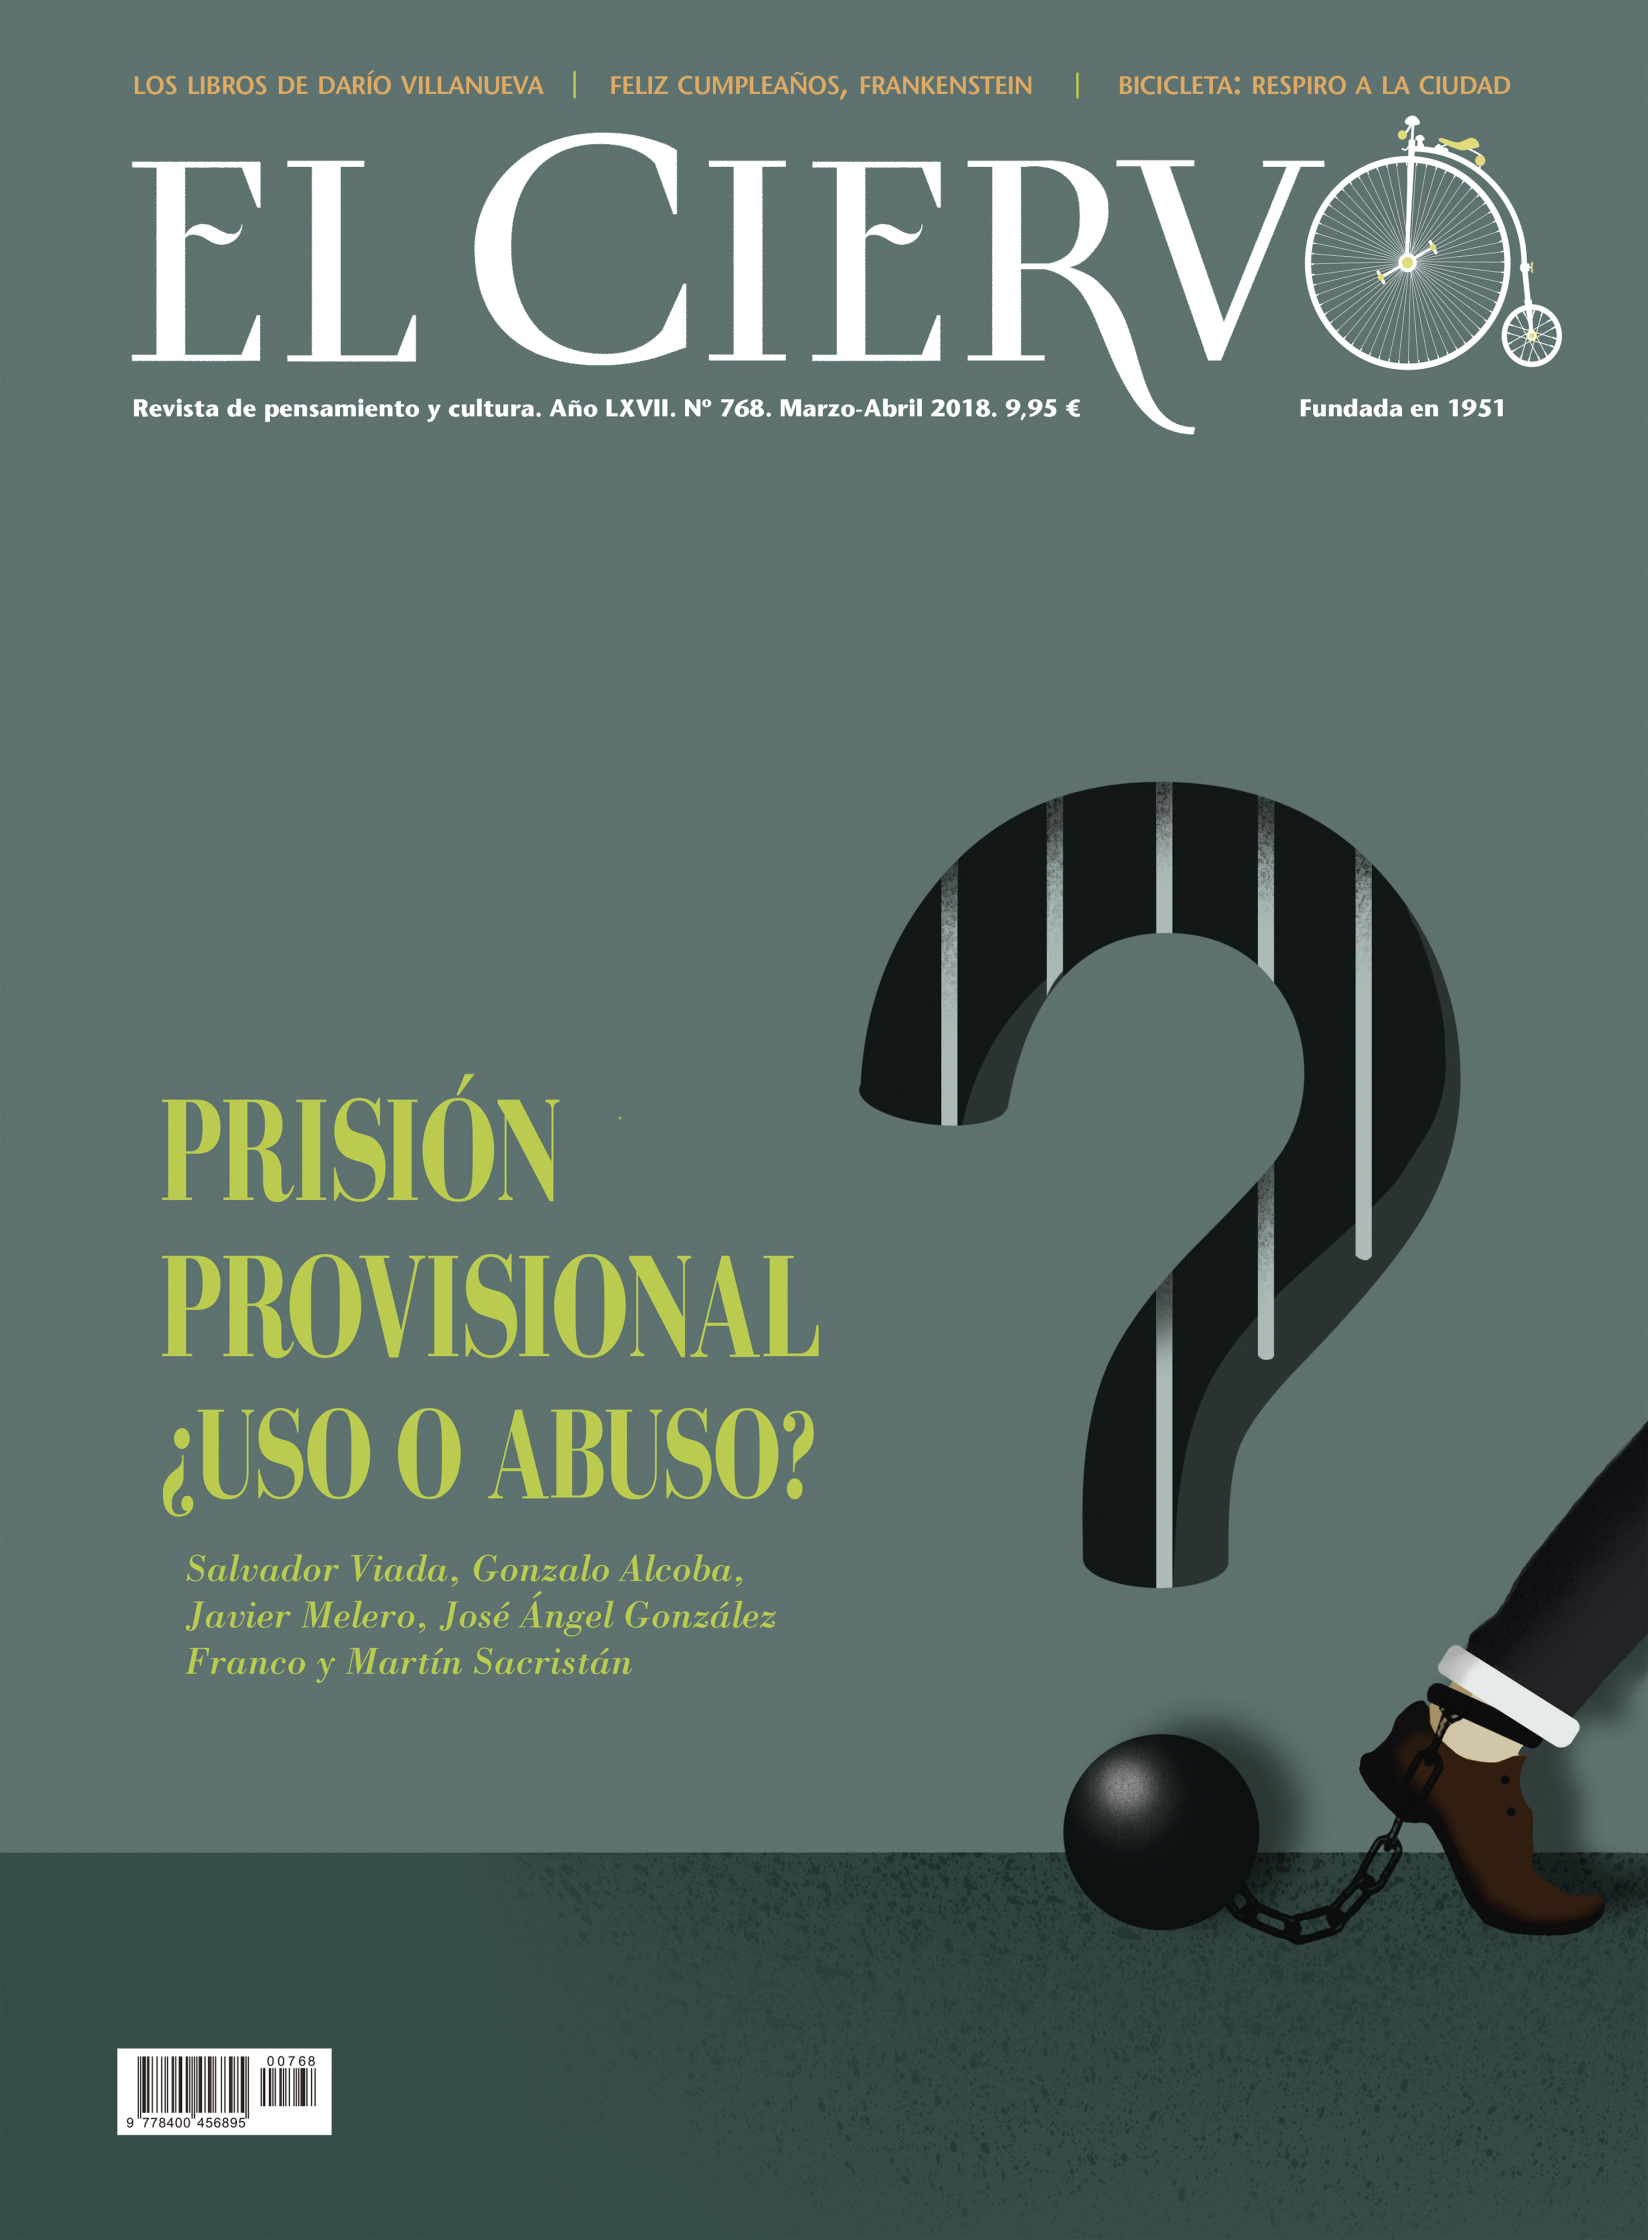 Cover for El Ciervo Magazine.jpg